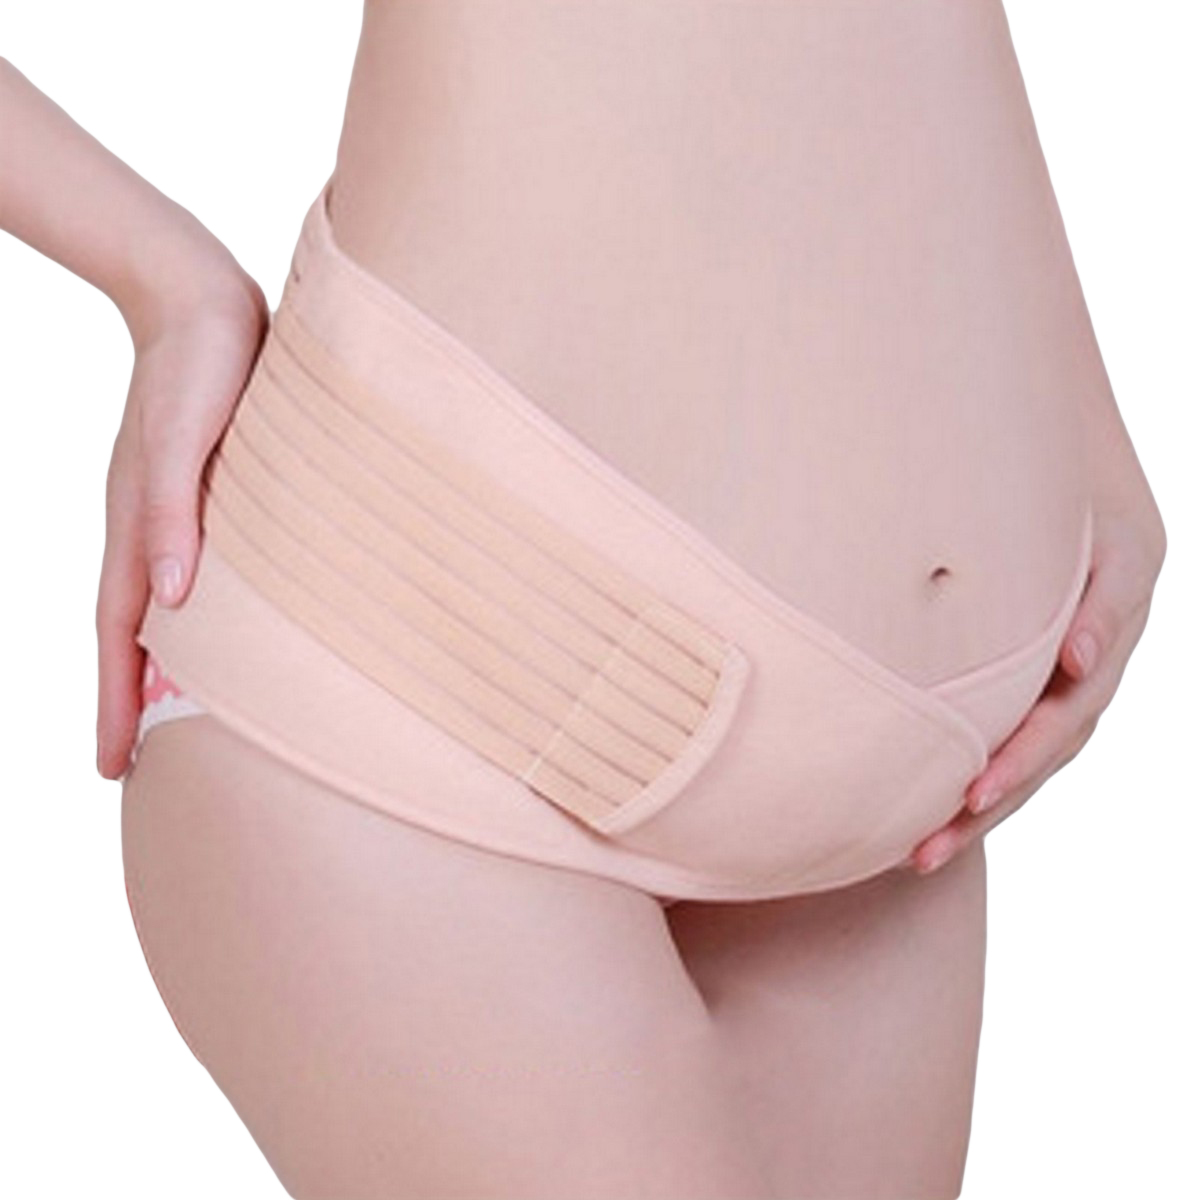 Postpartum Recovery Body Shaper Belt (Slimming Maternity Band